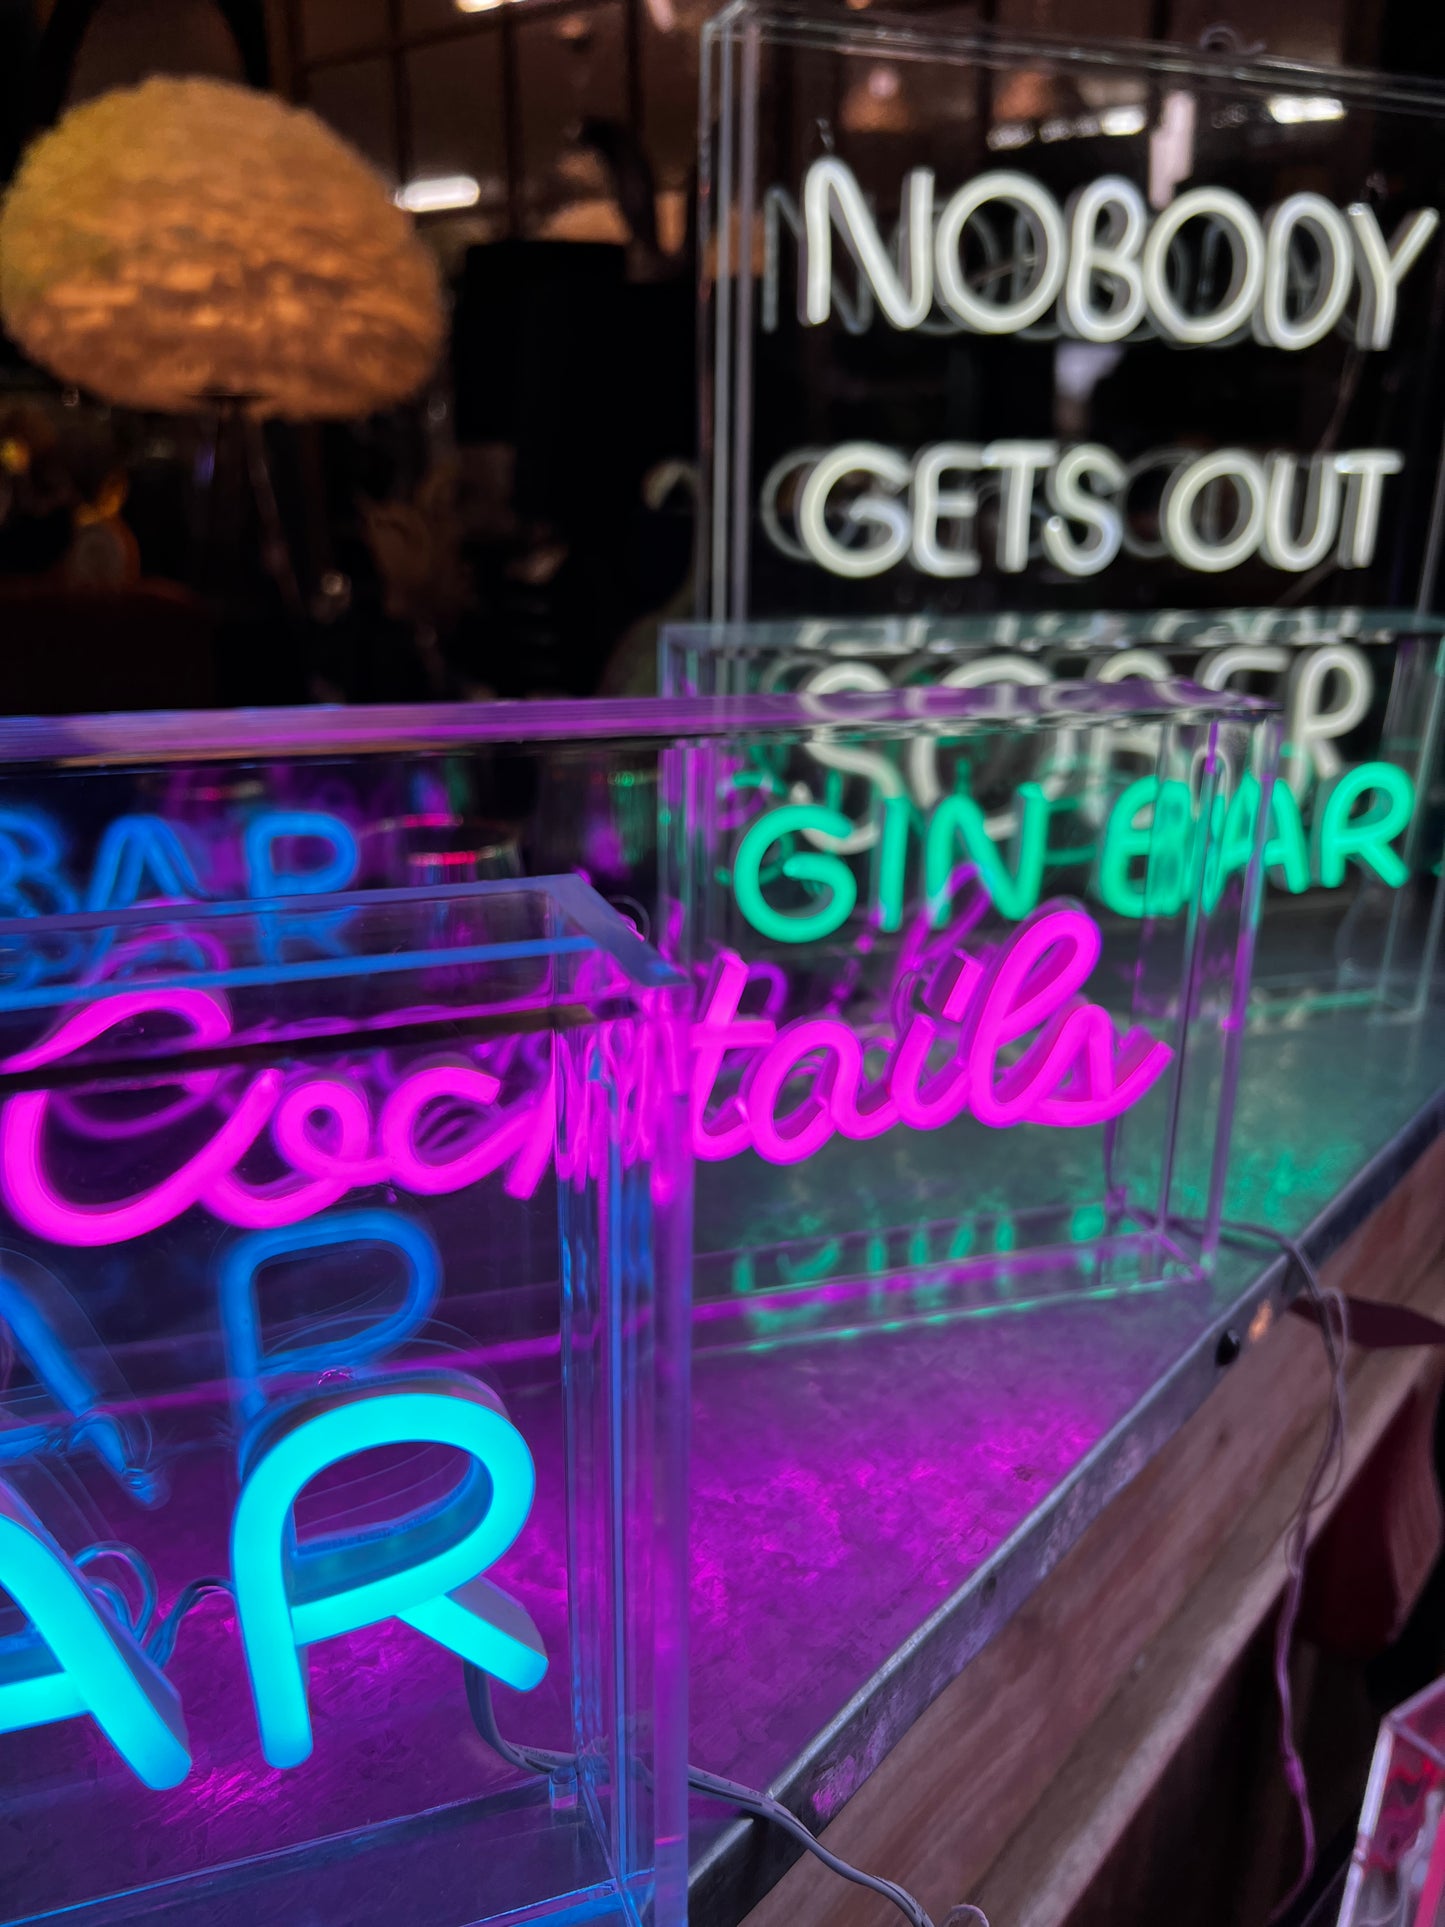 LED Neon Acrylic Light Box - Kitchen Disco